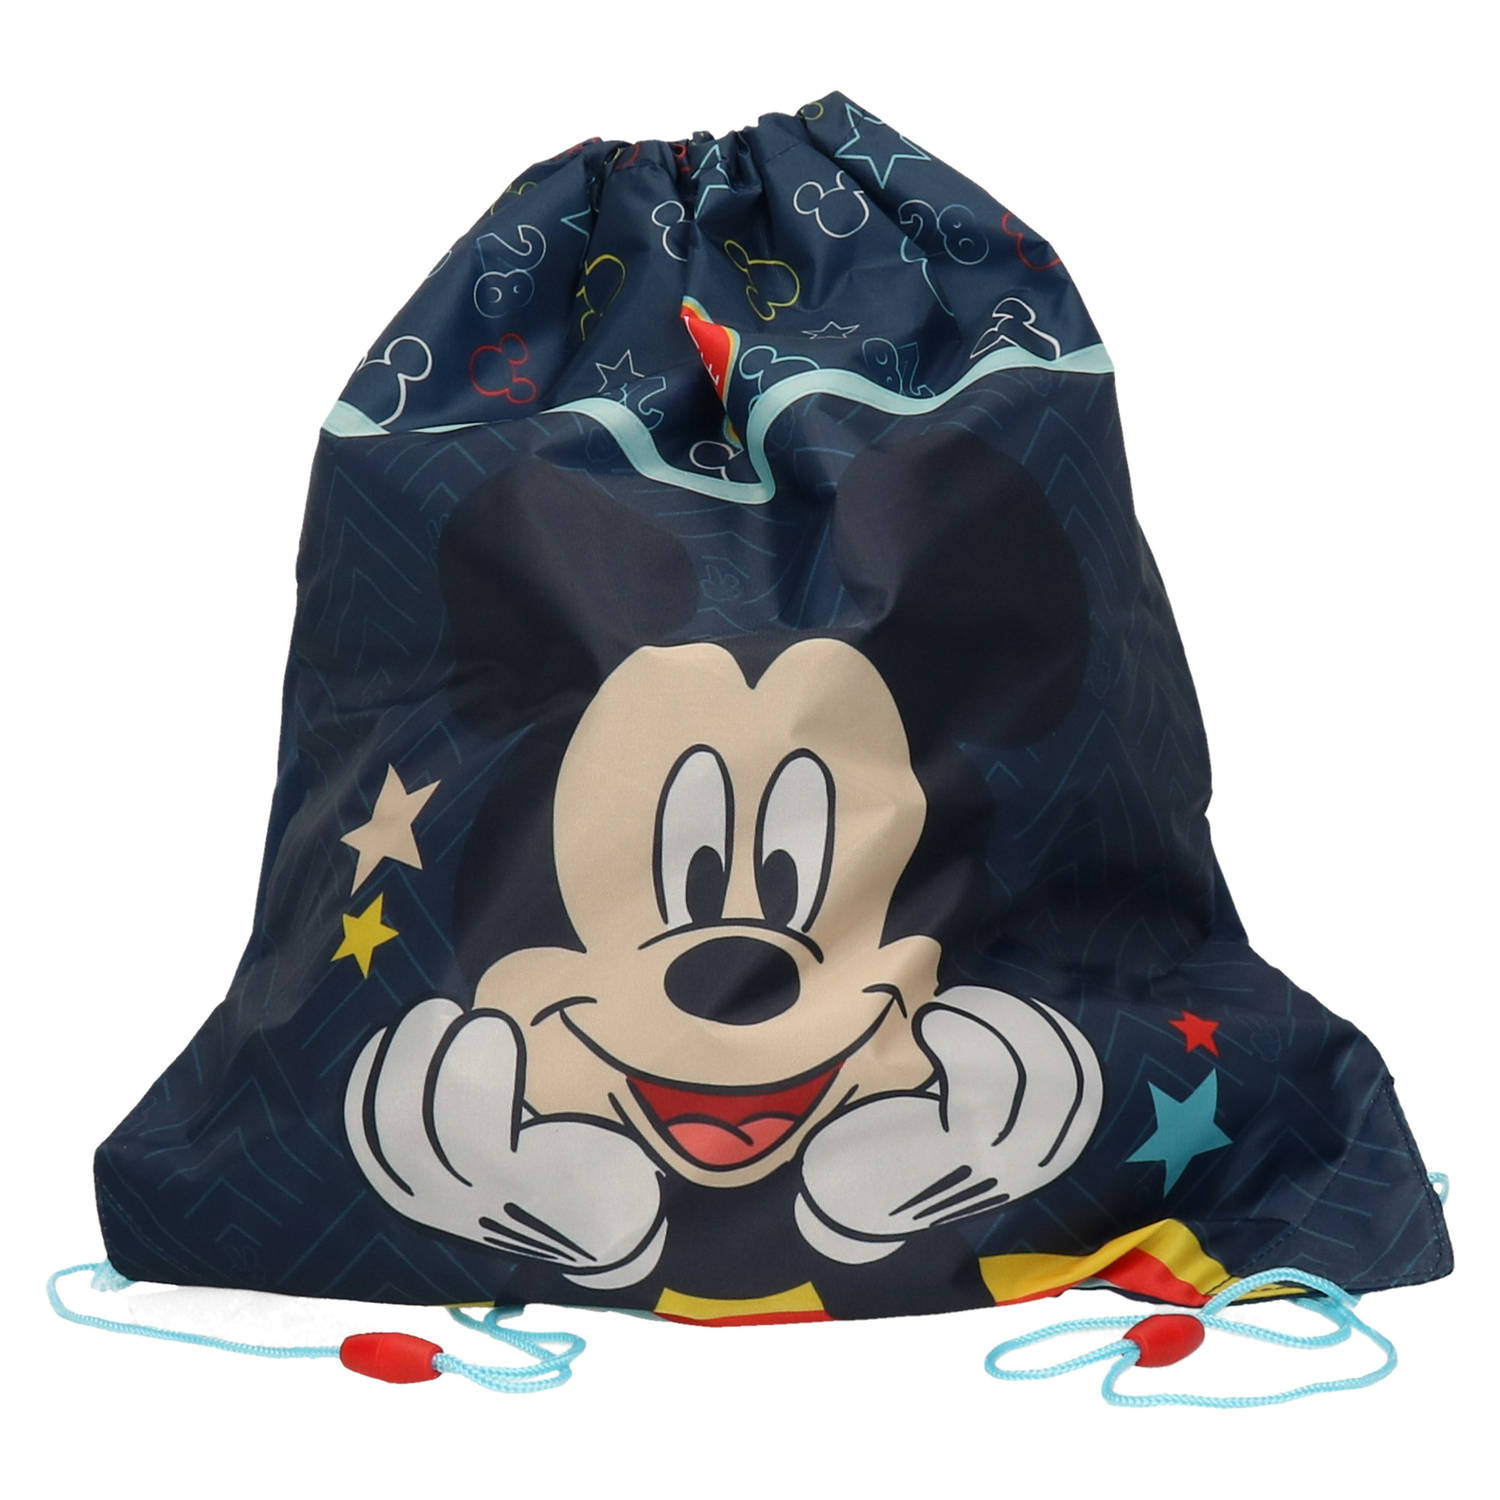 Disney Mickey Mouse gymtas-rugzak-rugtas voor kinderen blauw polyester 44 x 37 cm Gymtasje zwemtasje